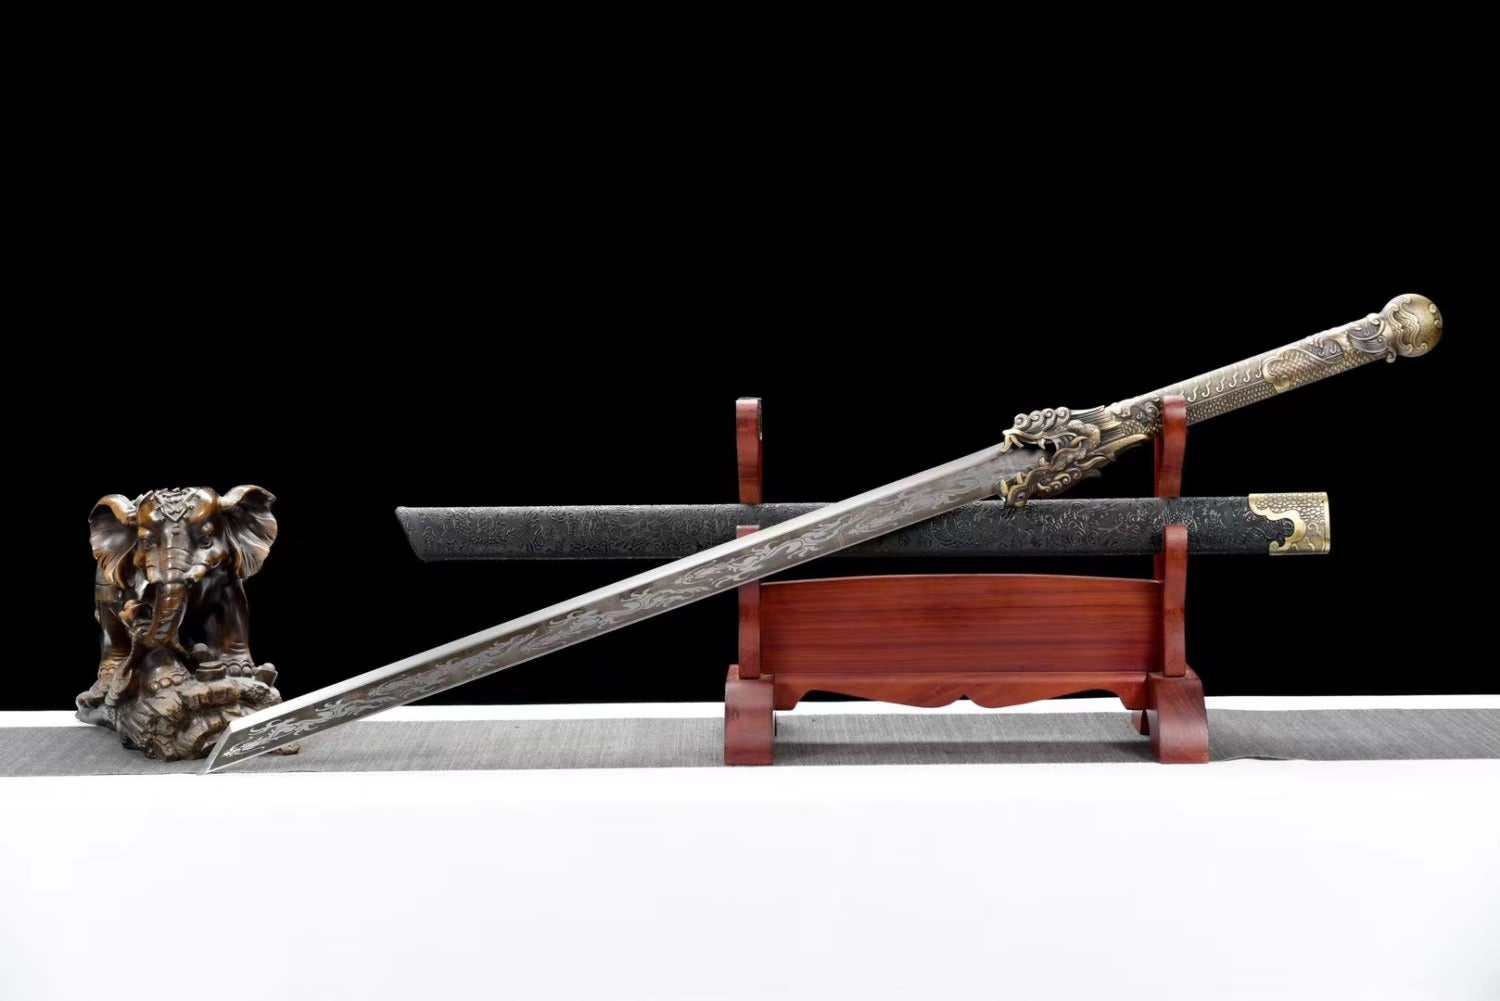 Dragon Handle Tang dao Sword, High Carbon Steel Blade, Martial Arts and Collectible